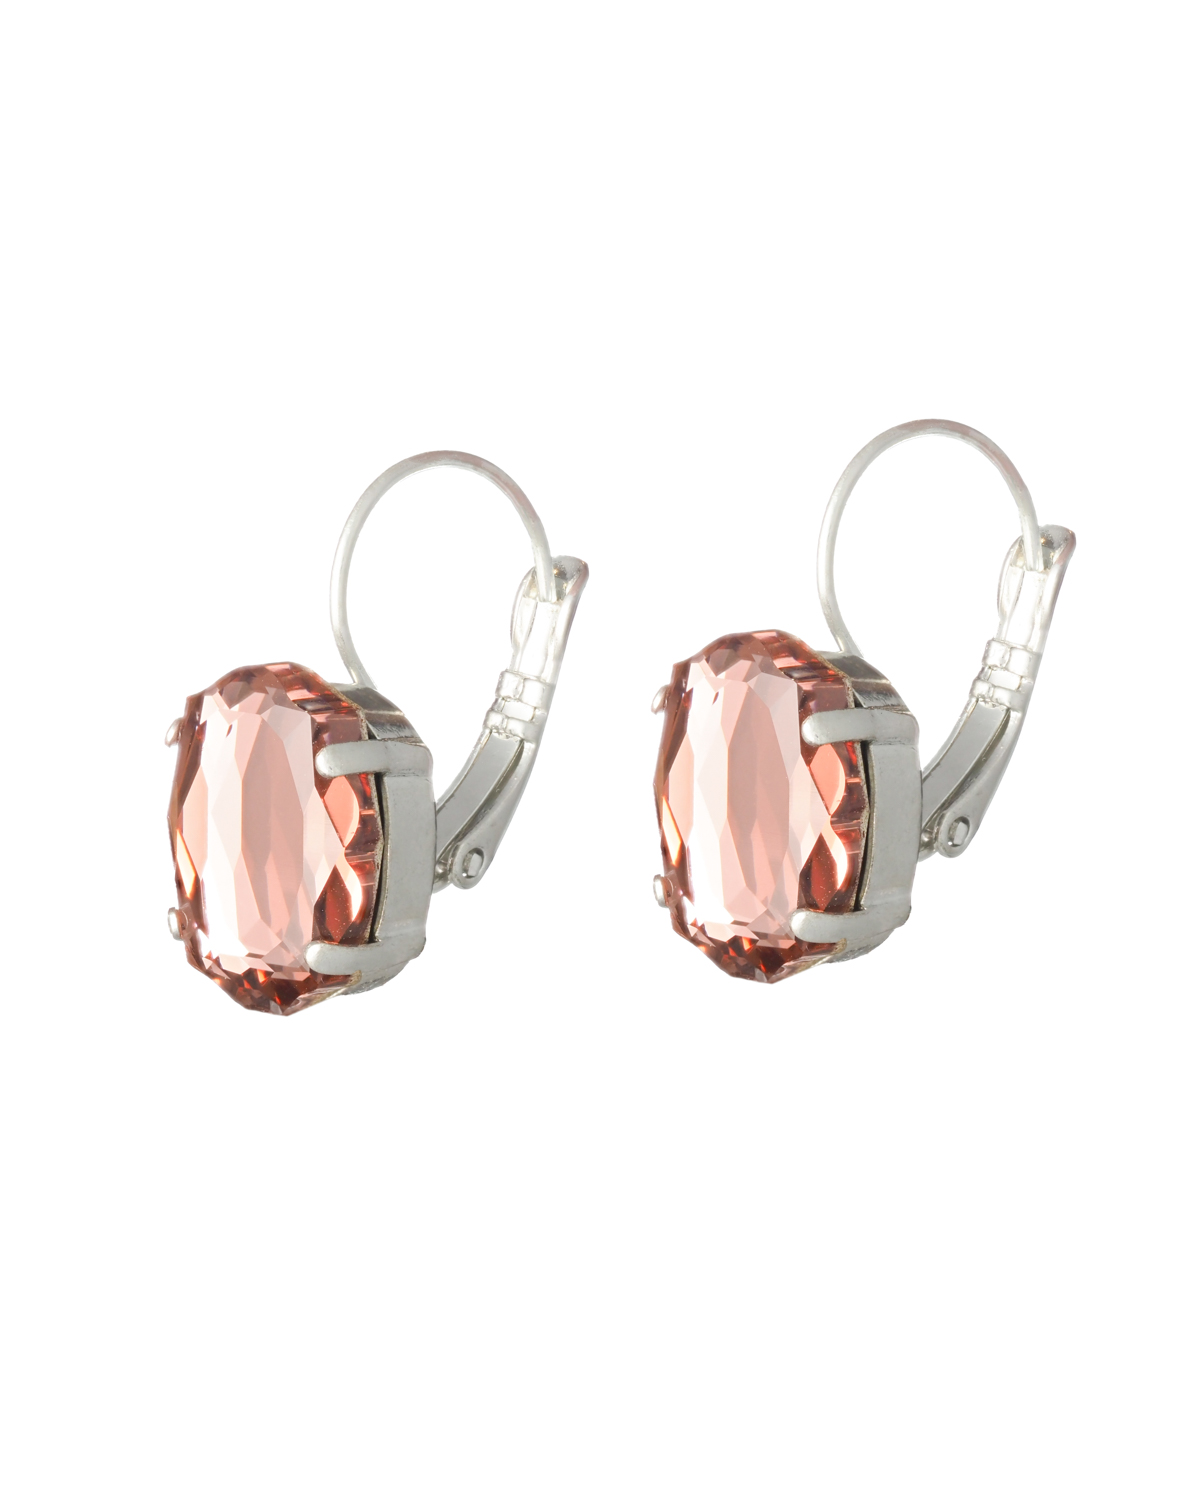 Blush Rose Baroque Mirror Earrings - Rhodium plated Close